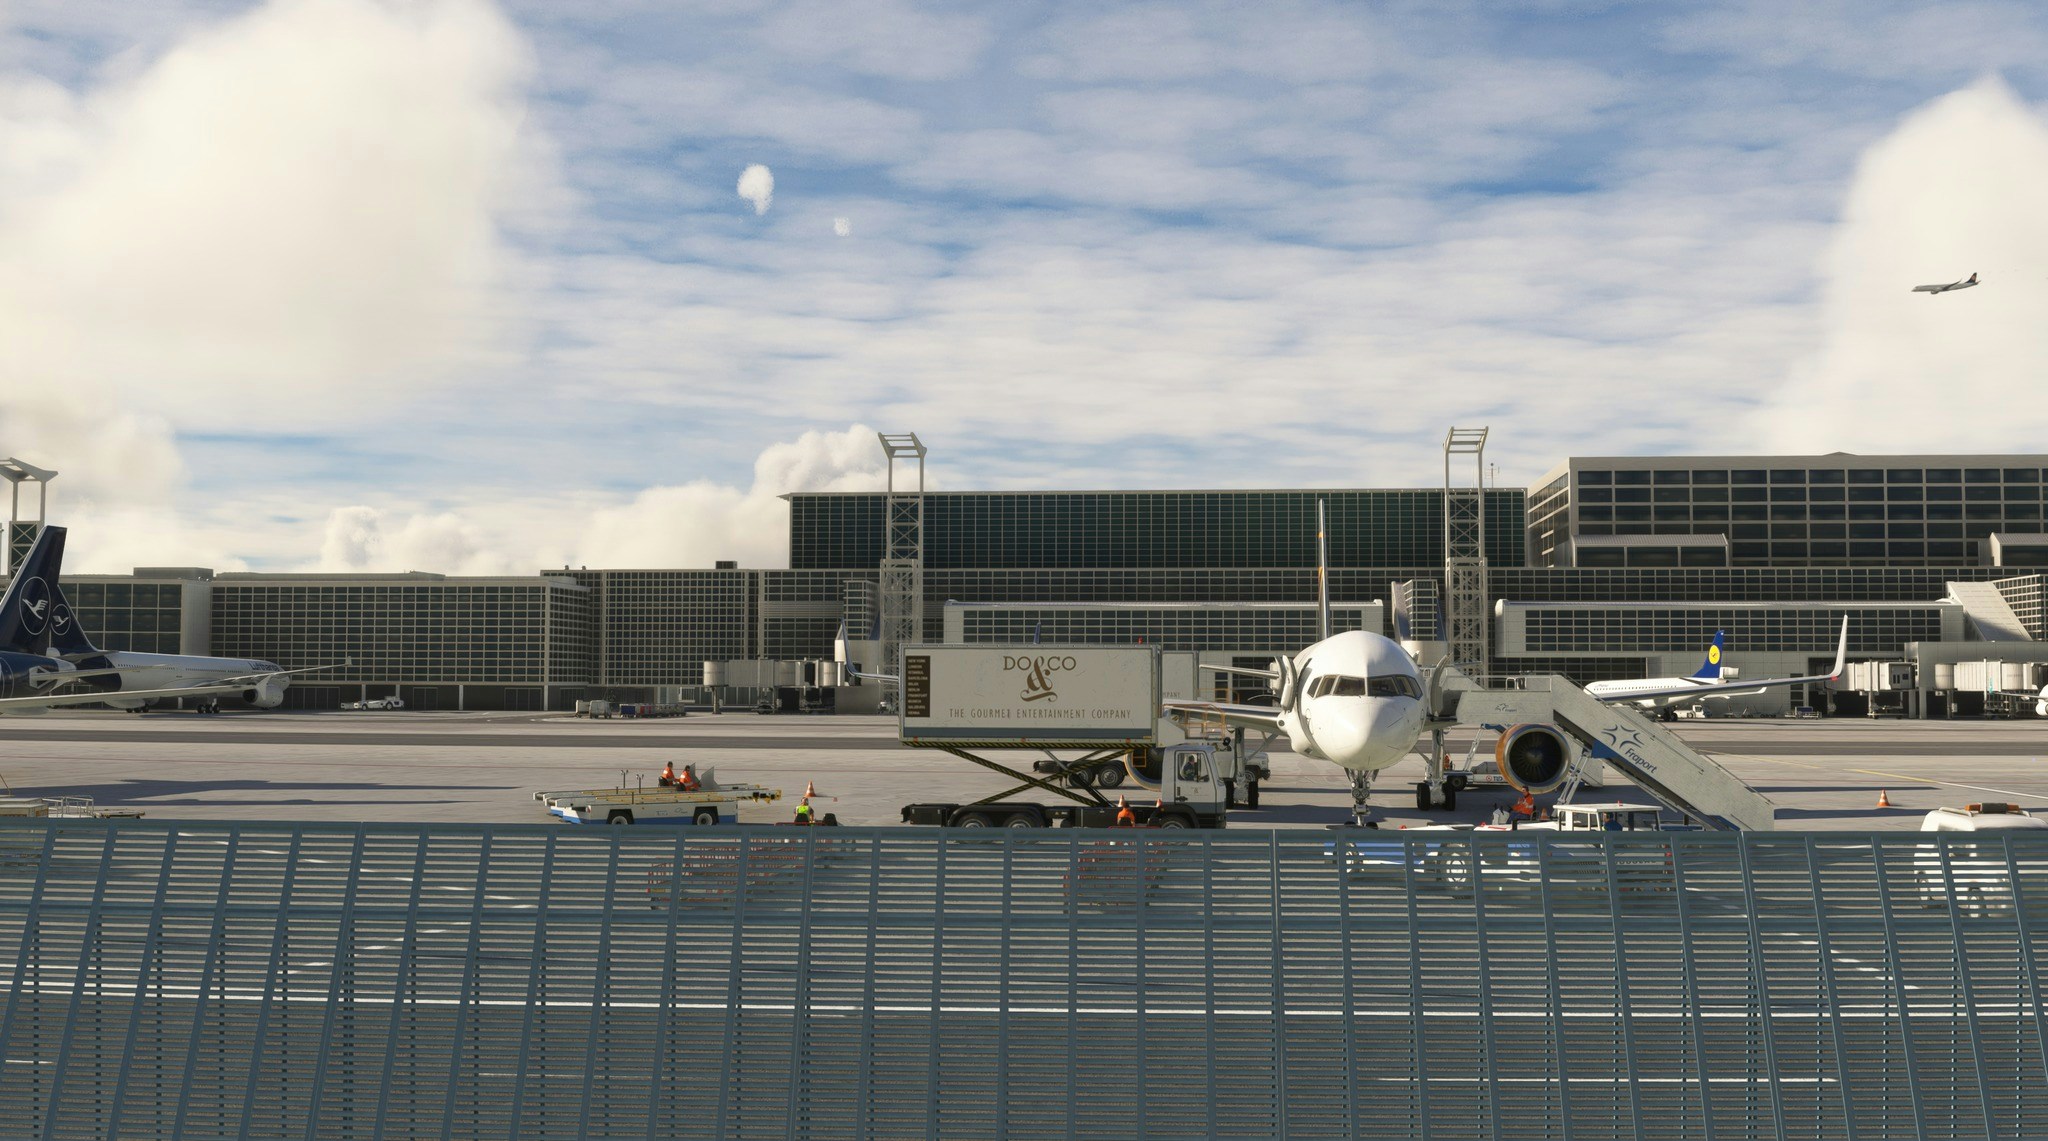 BlueBird Simulations Confirms FlightSimExpo Attendance, New Previews of 757